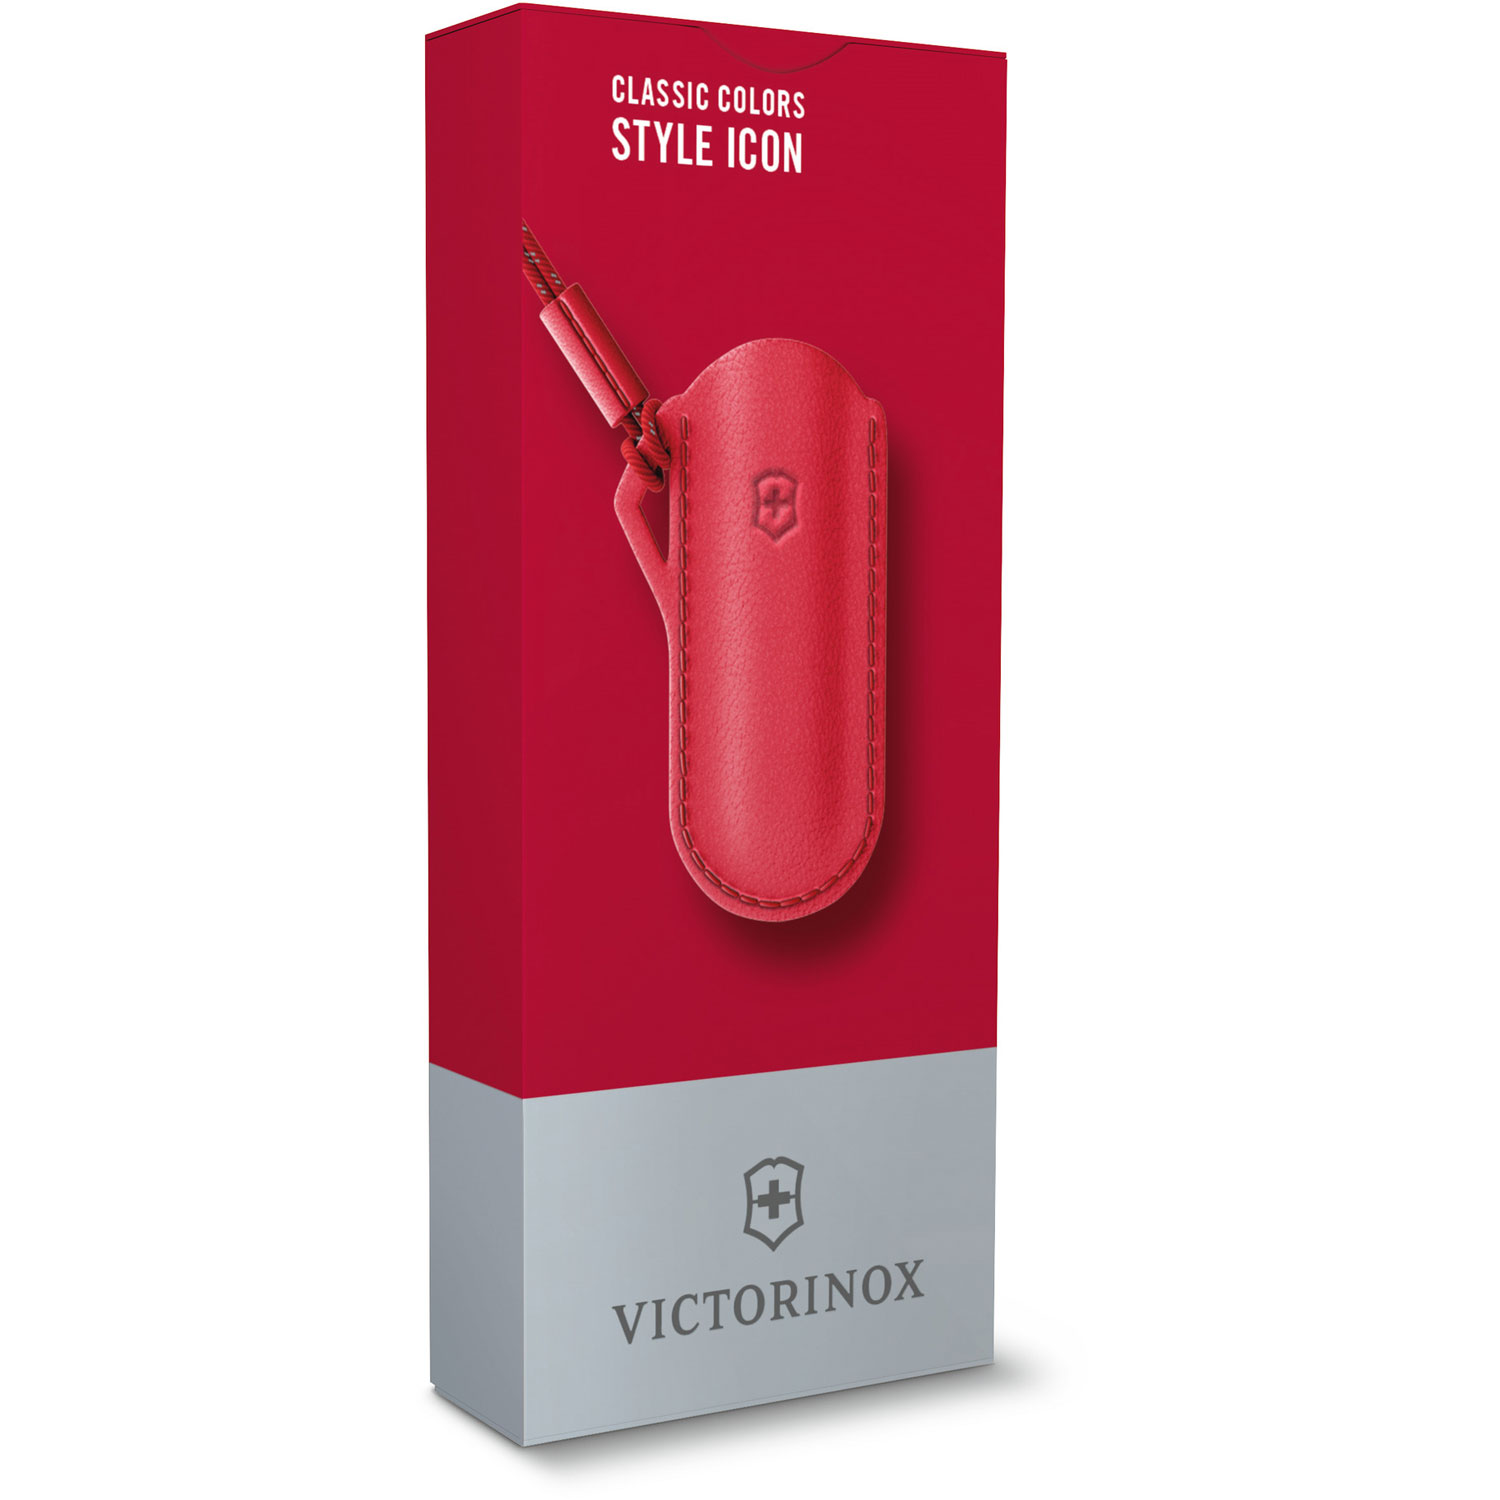 Leder-Etui rot für Victorinox Classic Colors in Verpackung